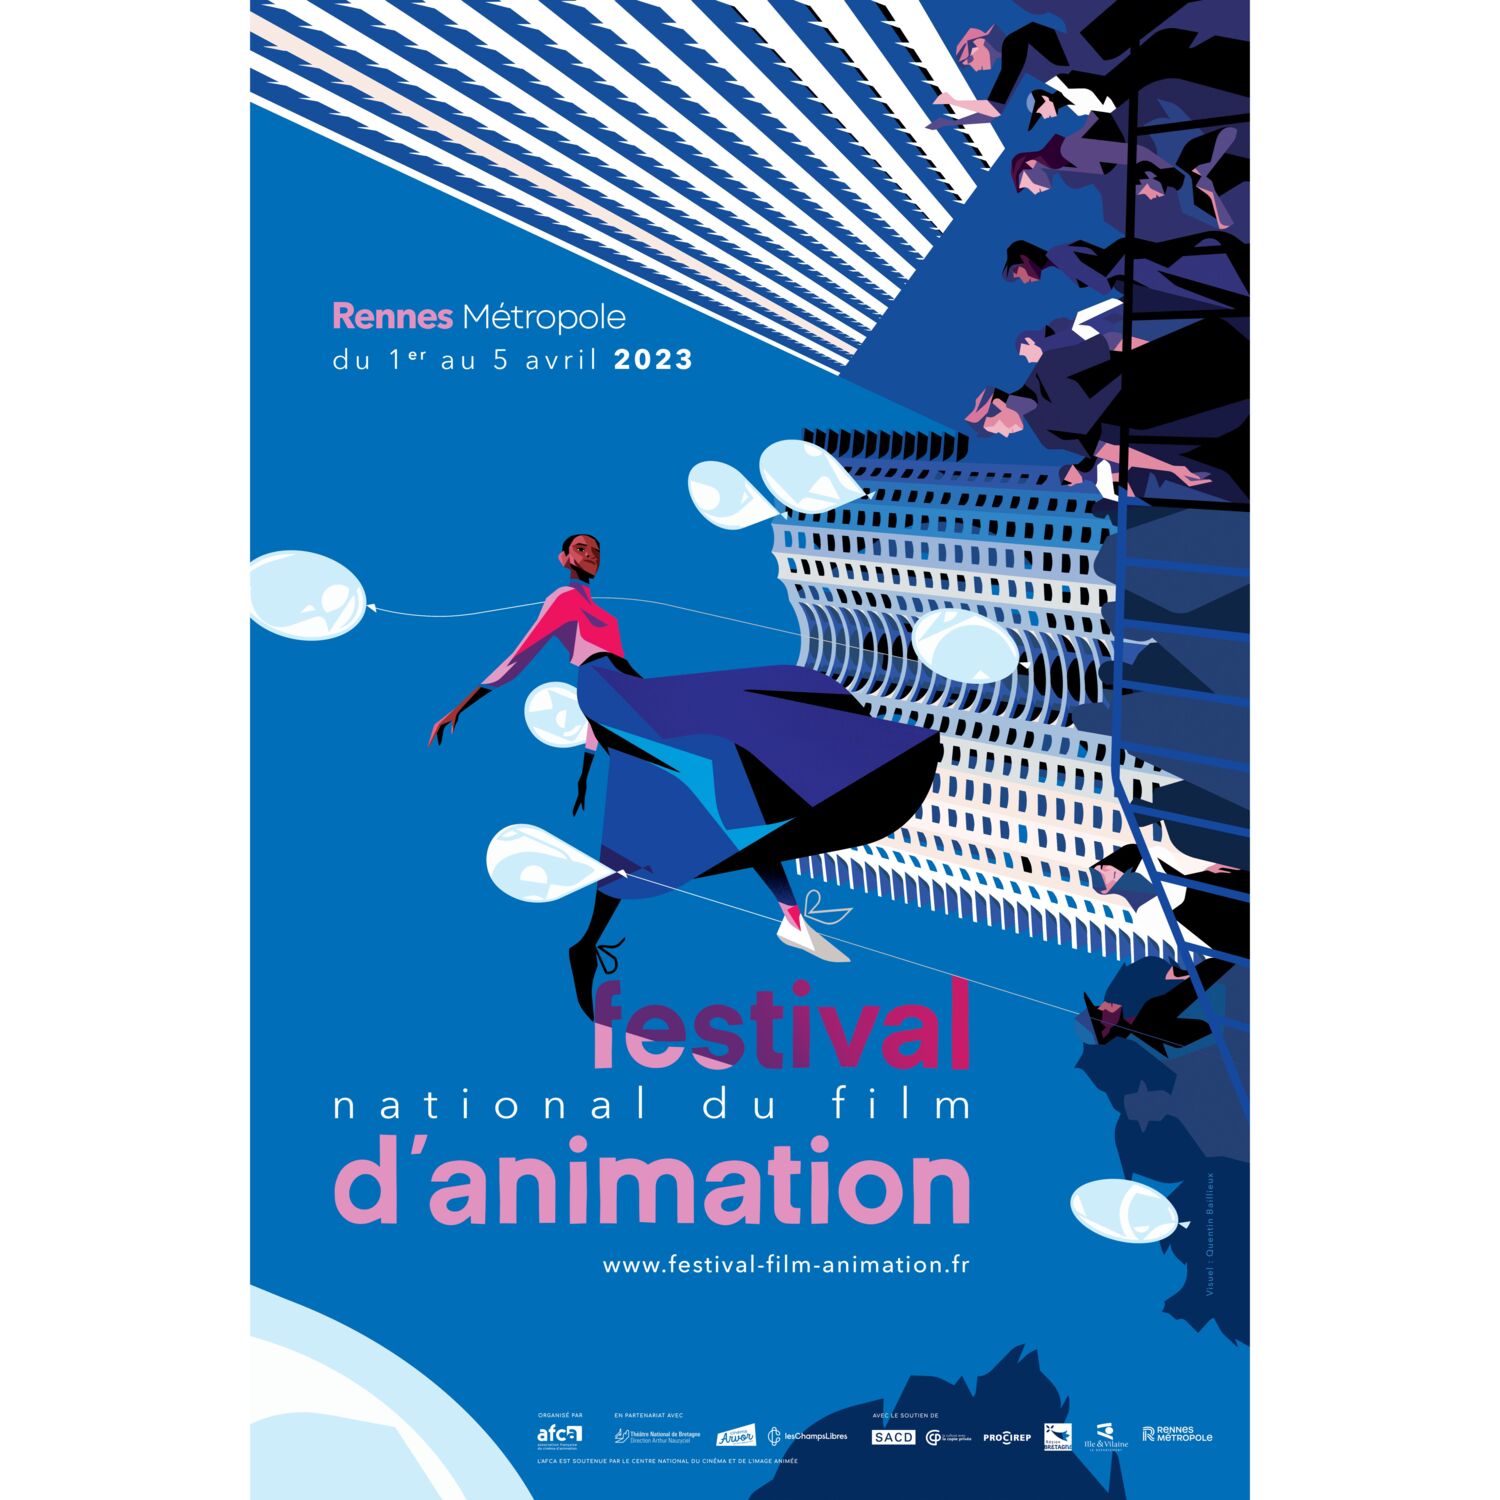 Le festival national du film d'animation commence ce 1er avril à Rennes